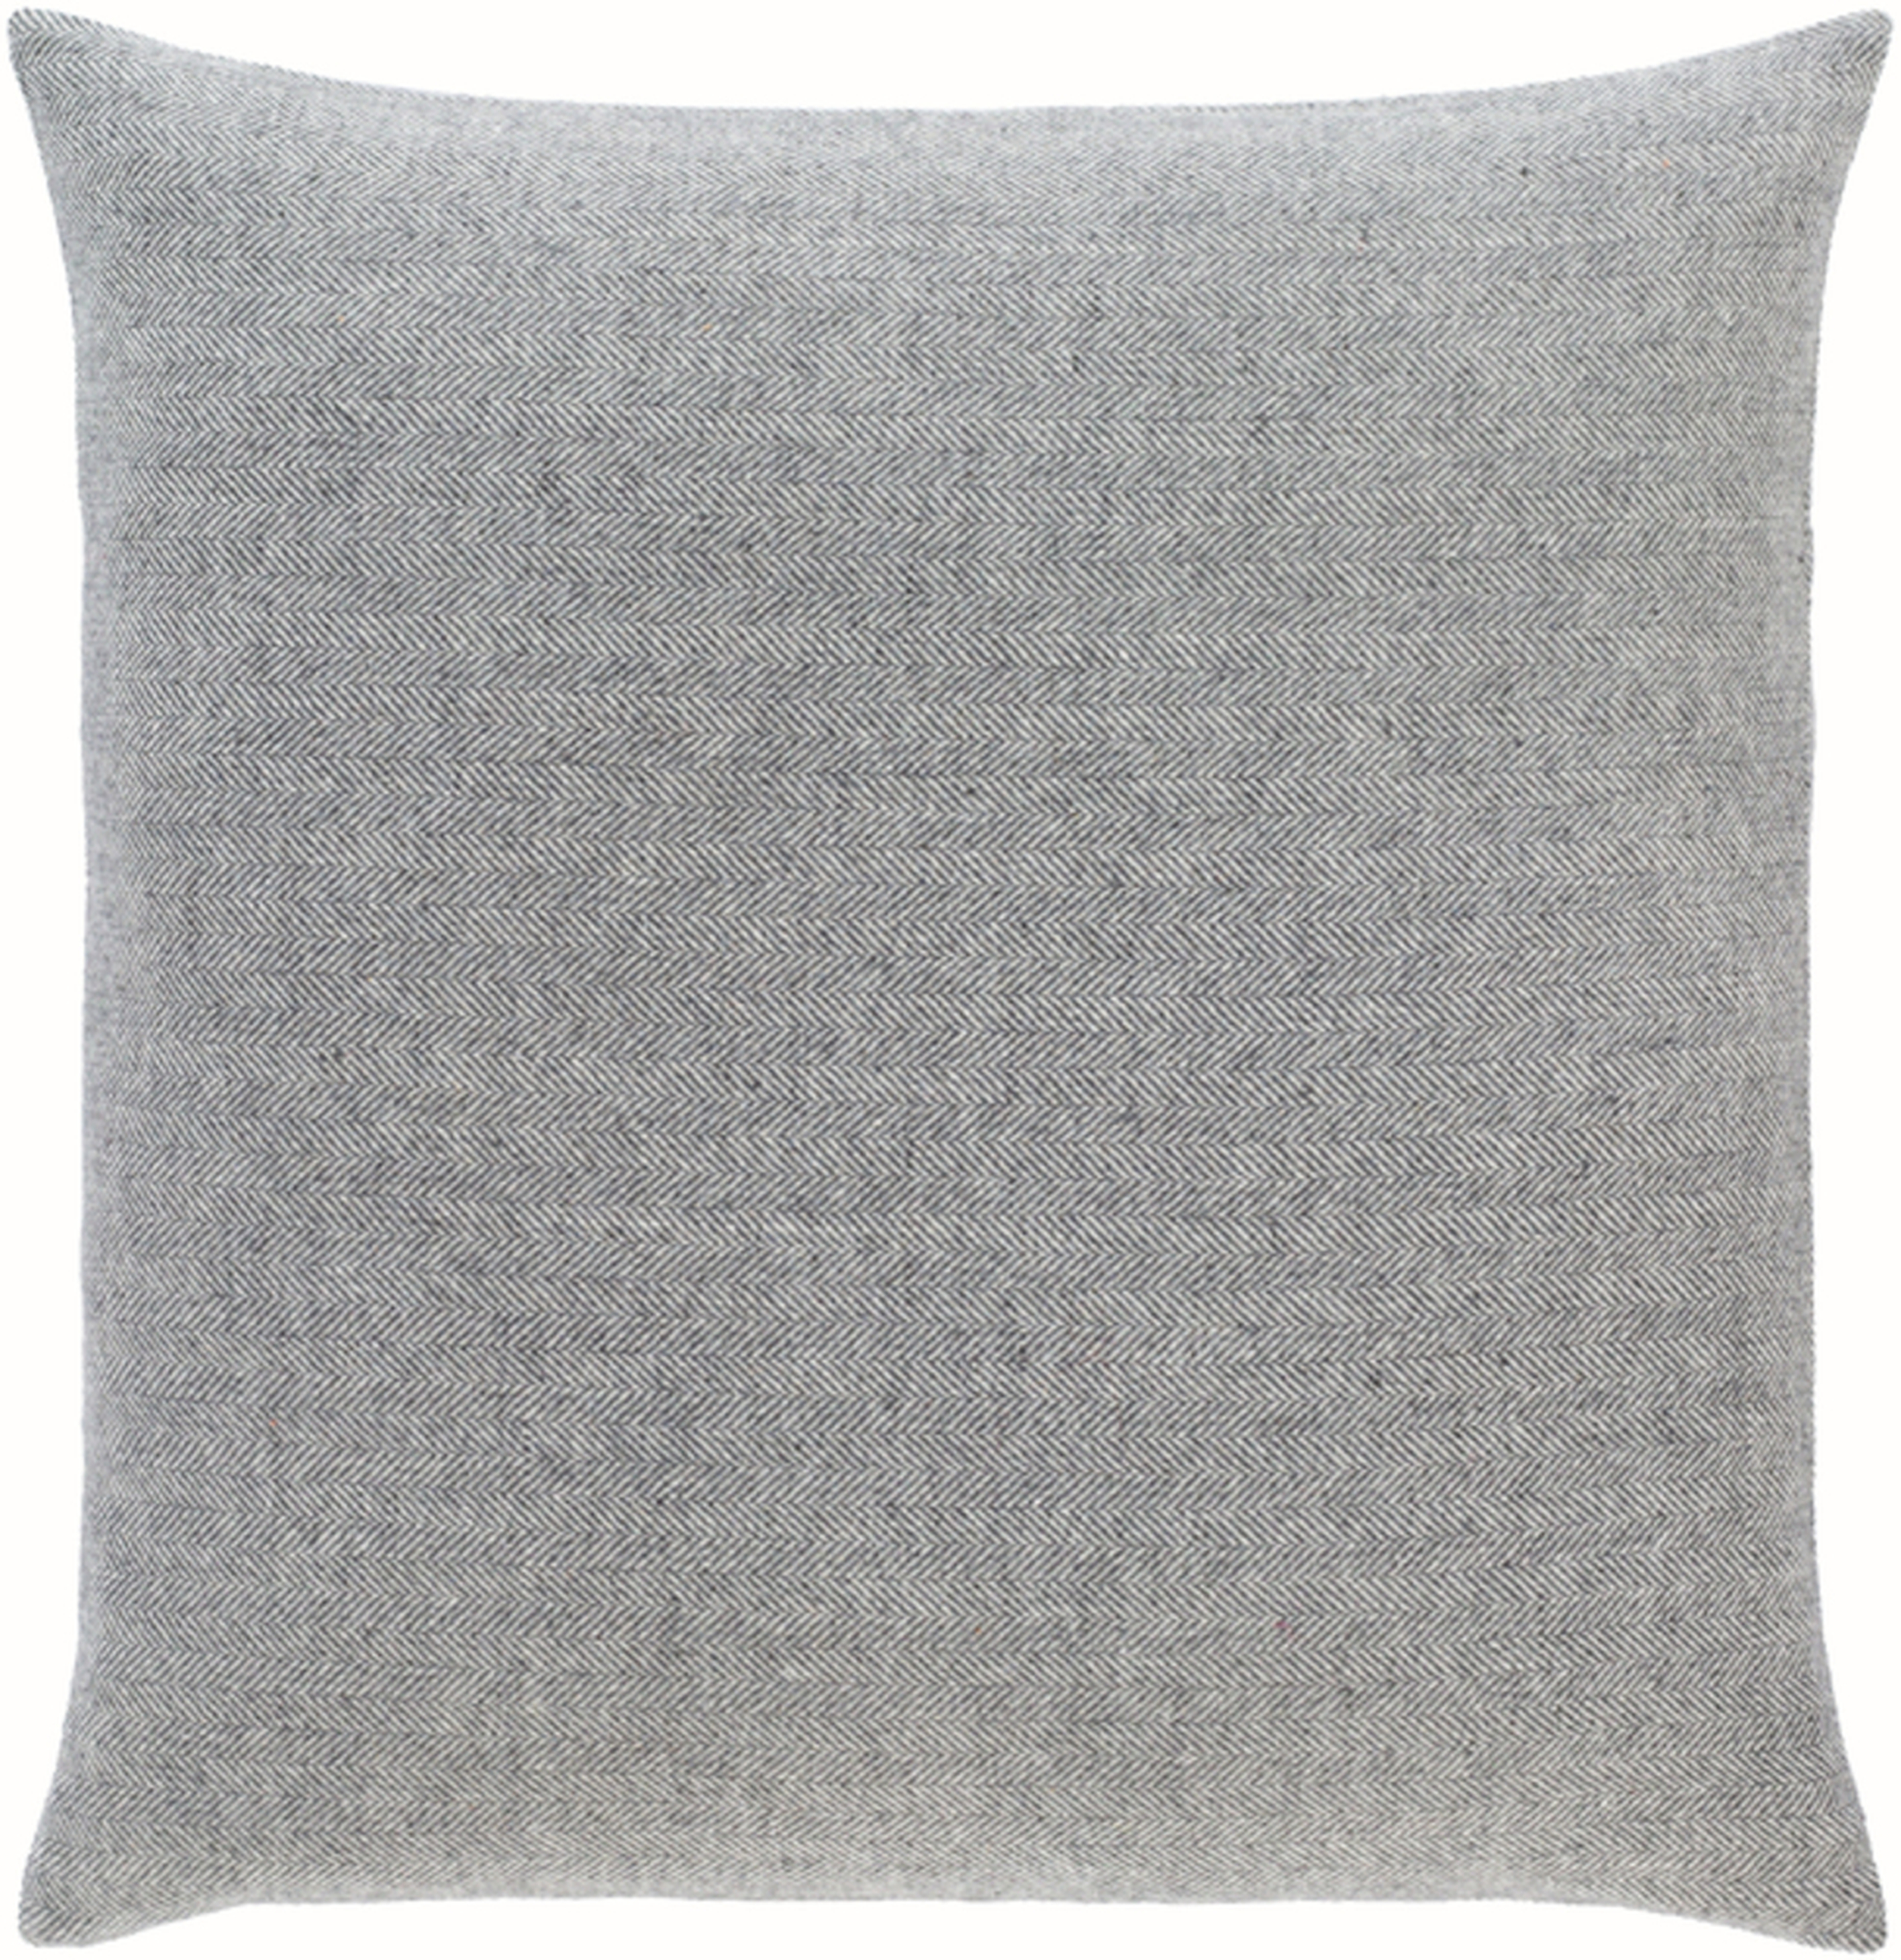 Wells Pillow, 20" x 20", Charcoal - Cove Goods